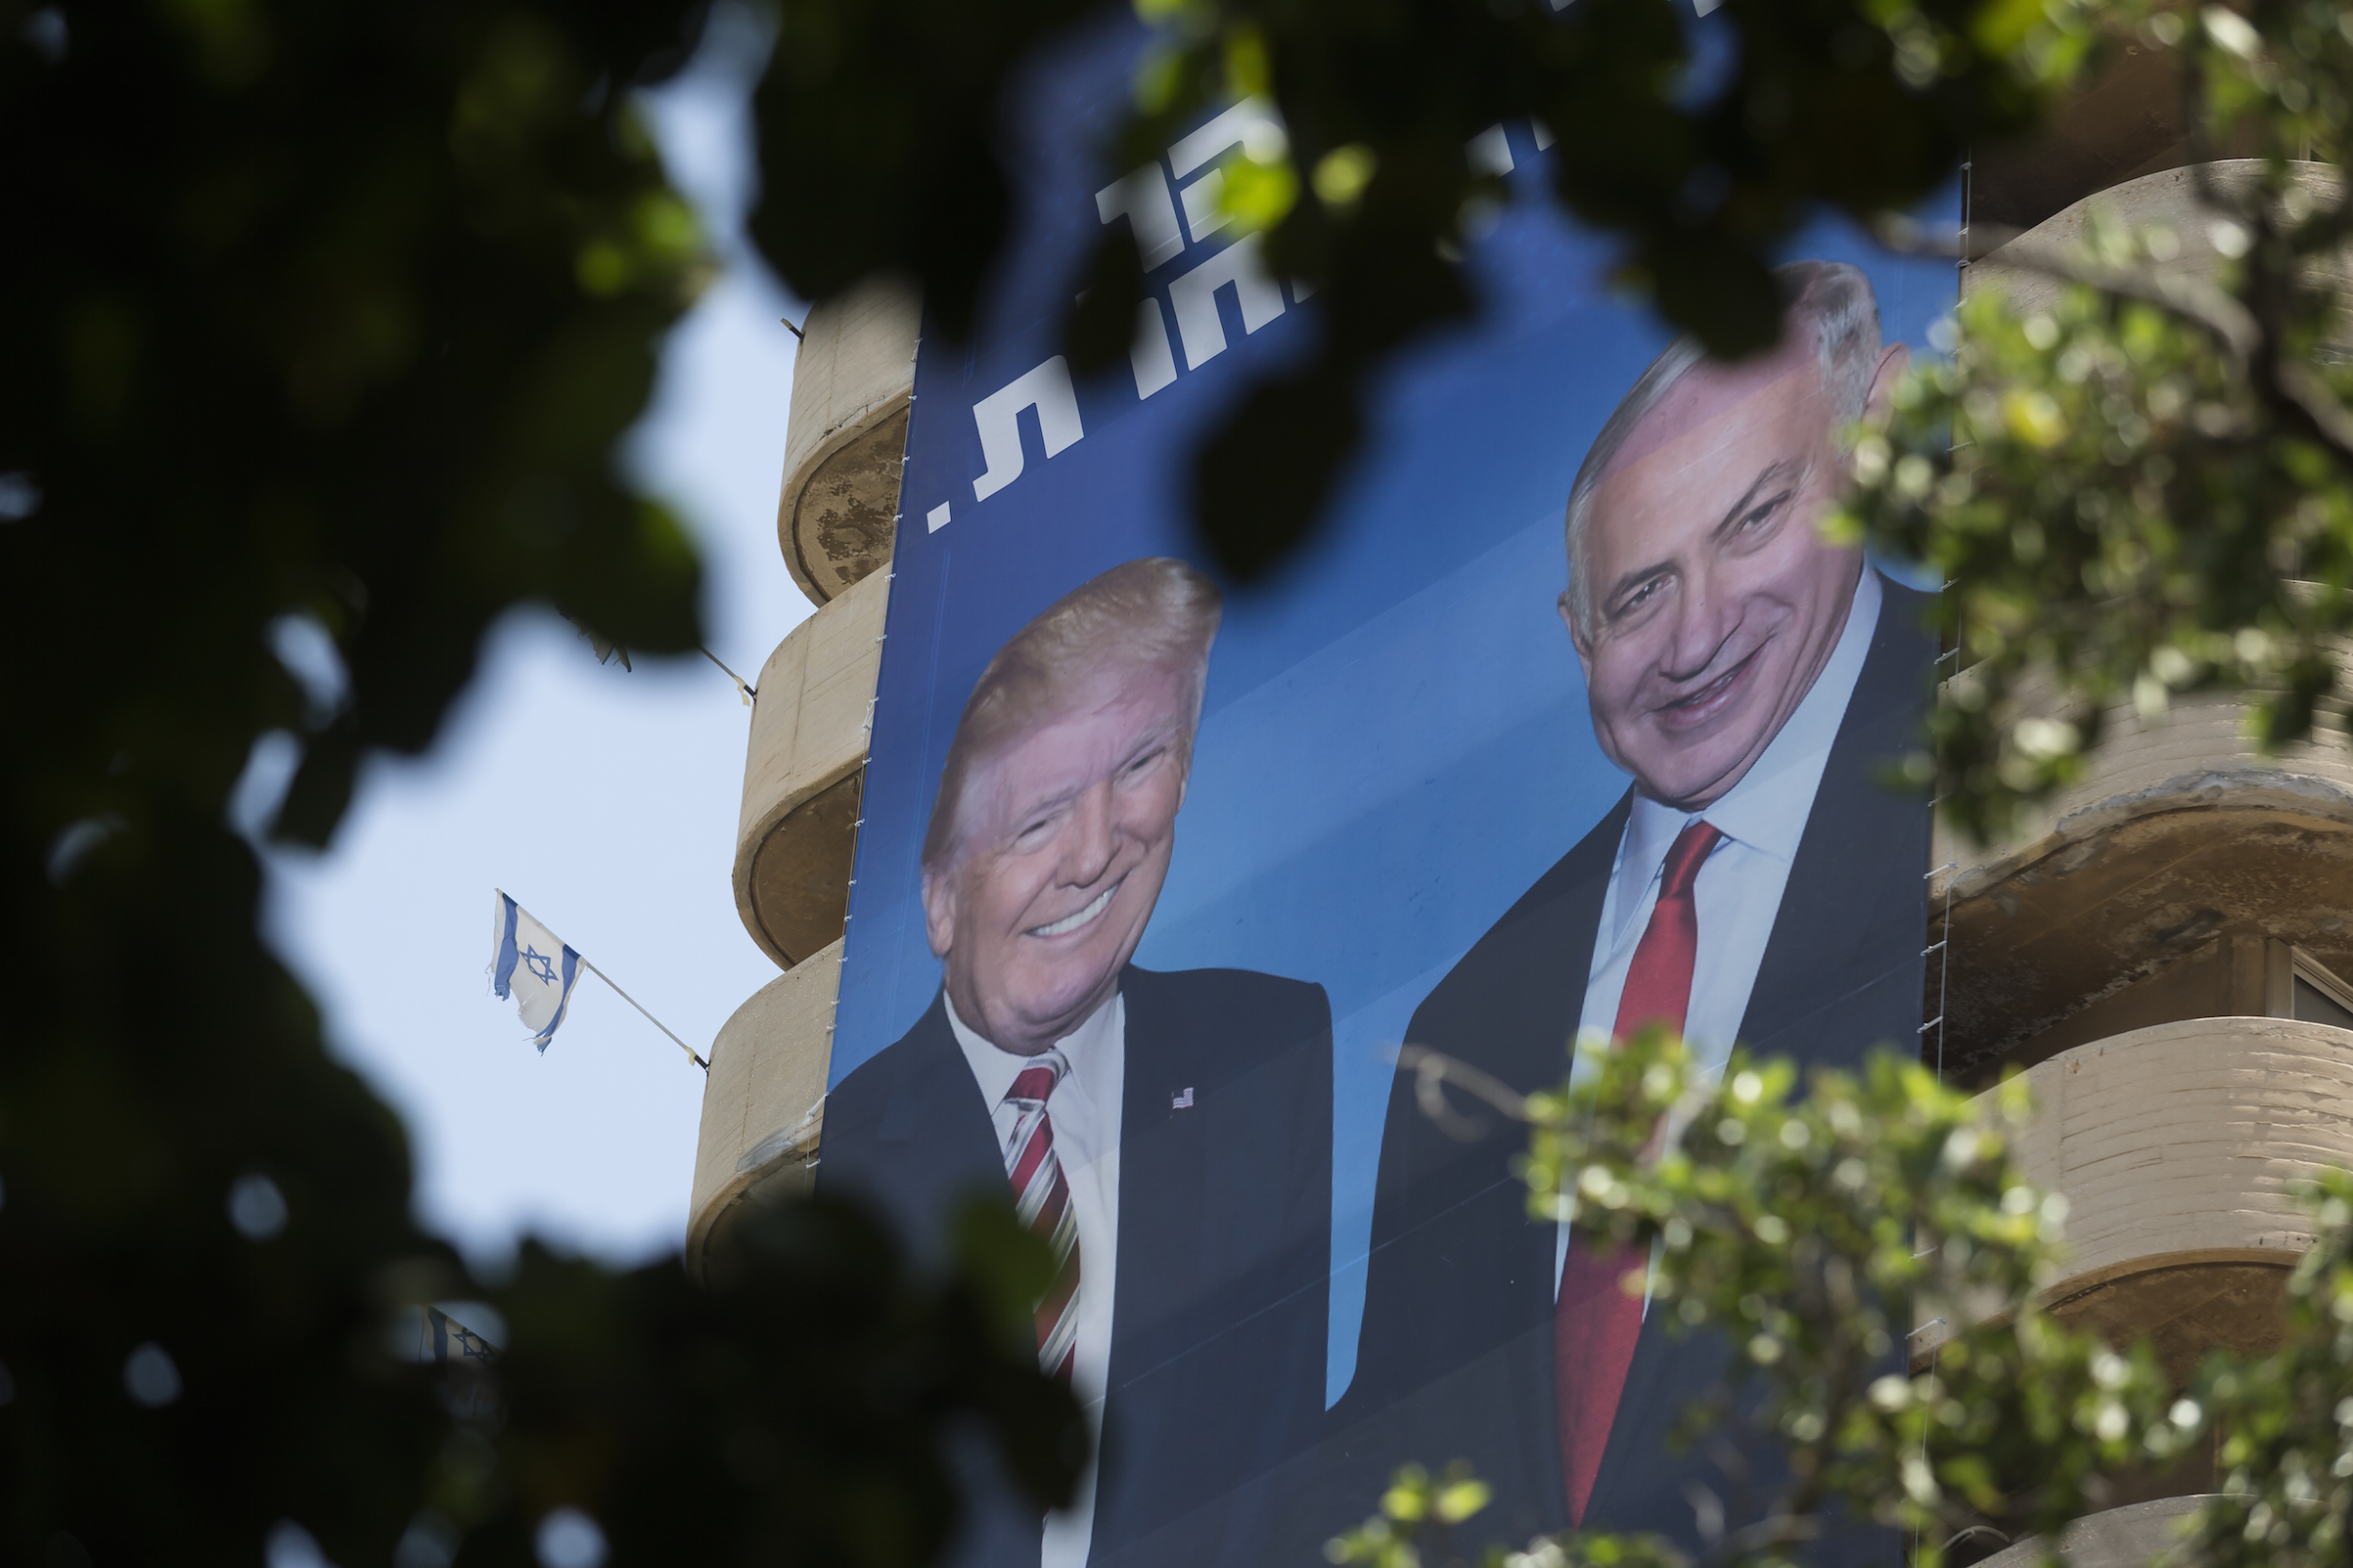 Likud Billboards Show Netanyahu Greeting Trump, Modi And Putin